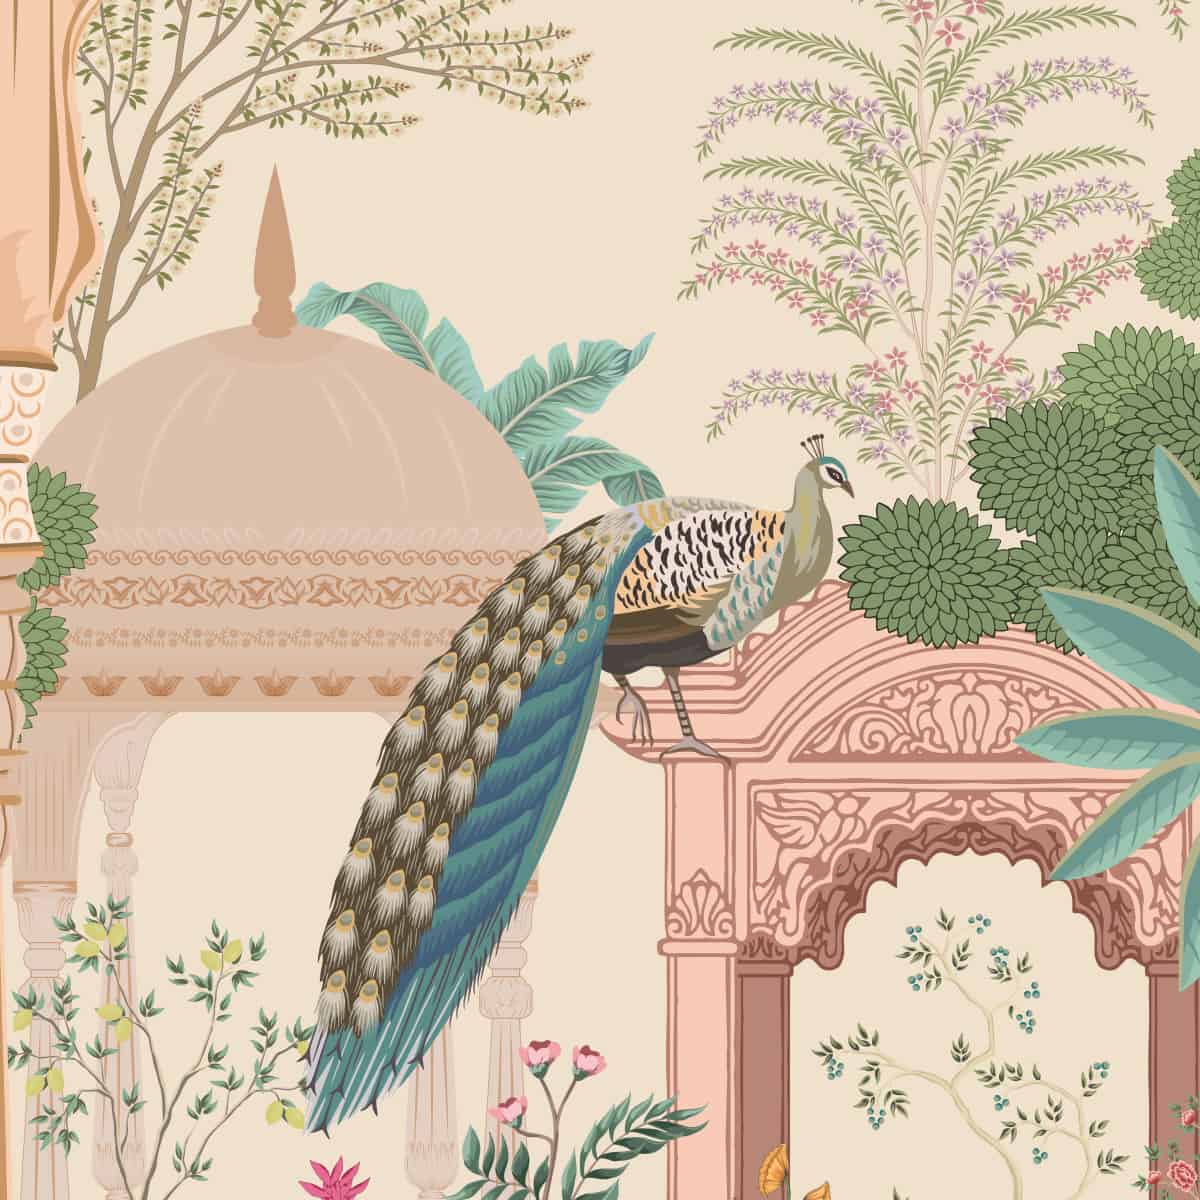 Aangan Indian Theme Wallpaper with Peacocks